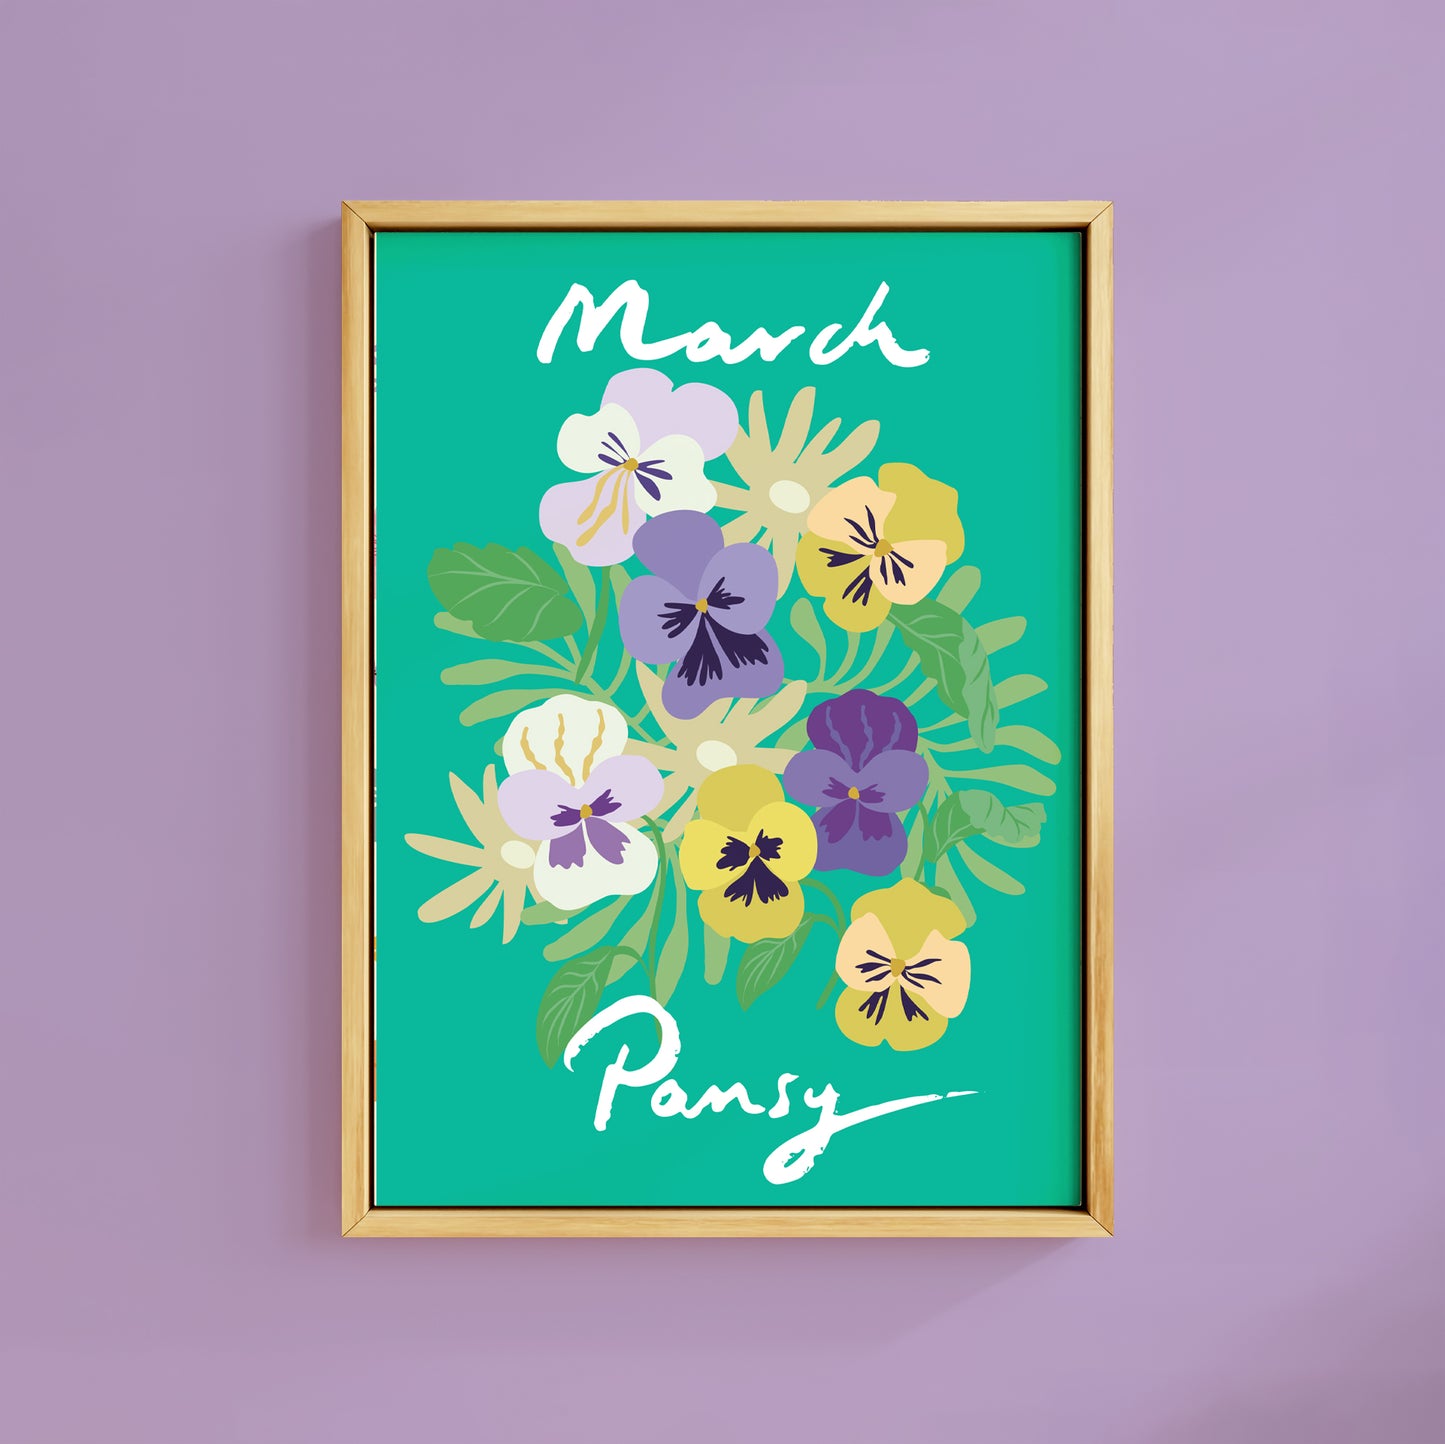 MARCH PANSY BIRTH FLOWER